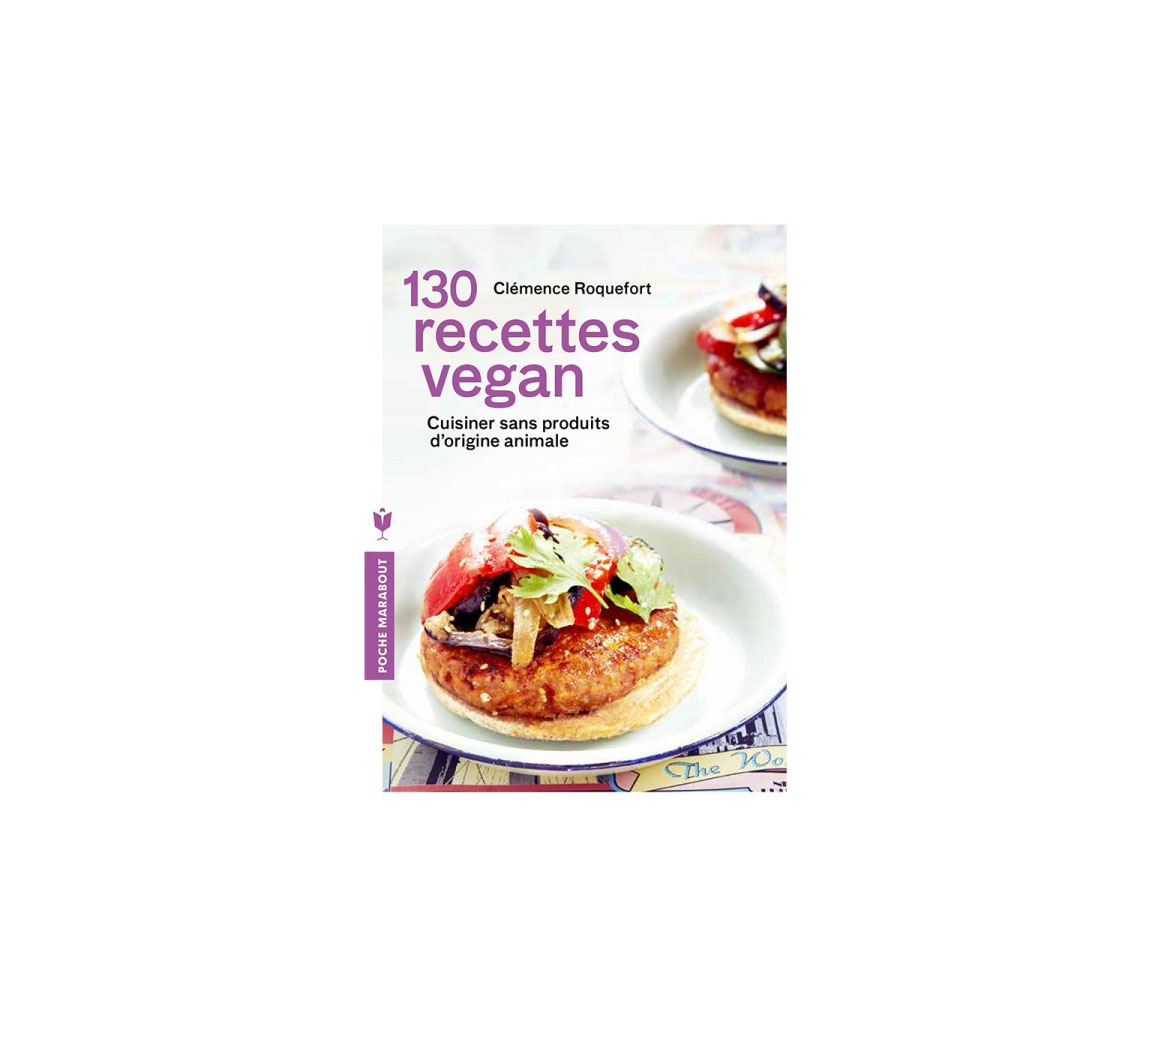 130 recettes vegan Livre : 130 recettes vegan